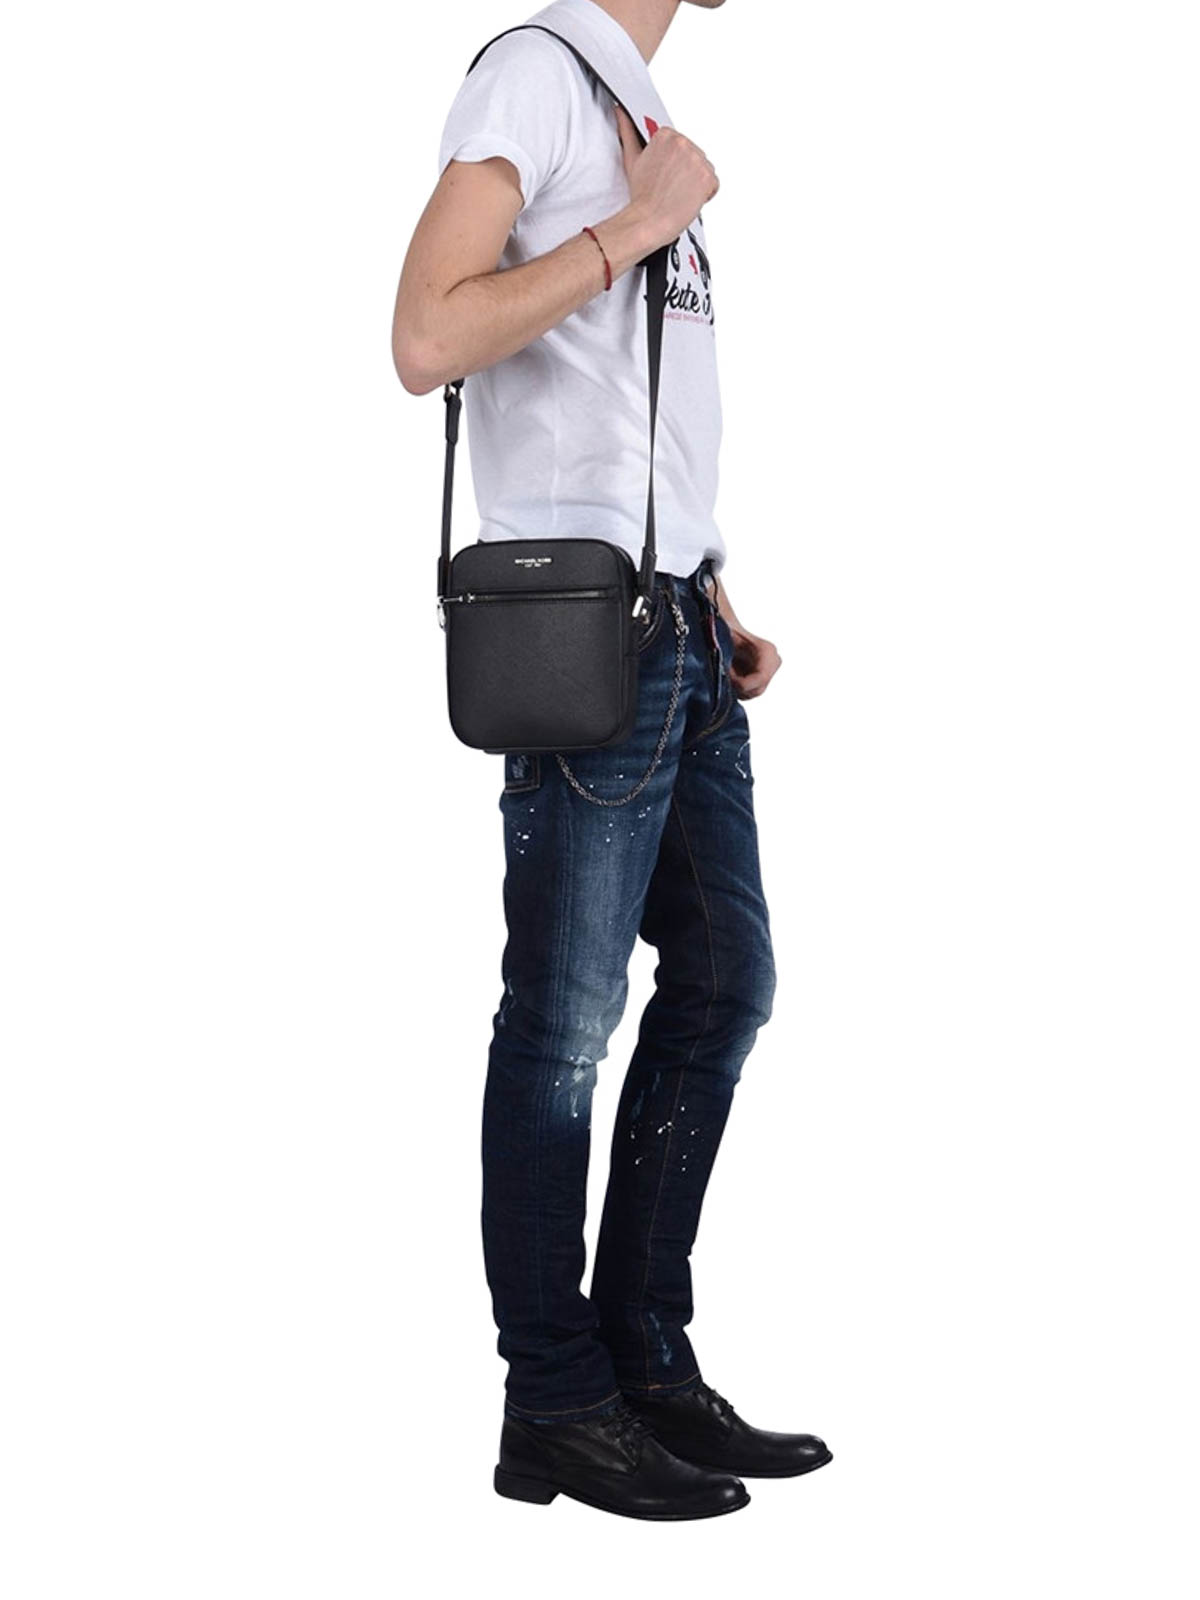 Michael Kors Harrison Large Leather Tote Bag